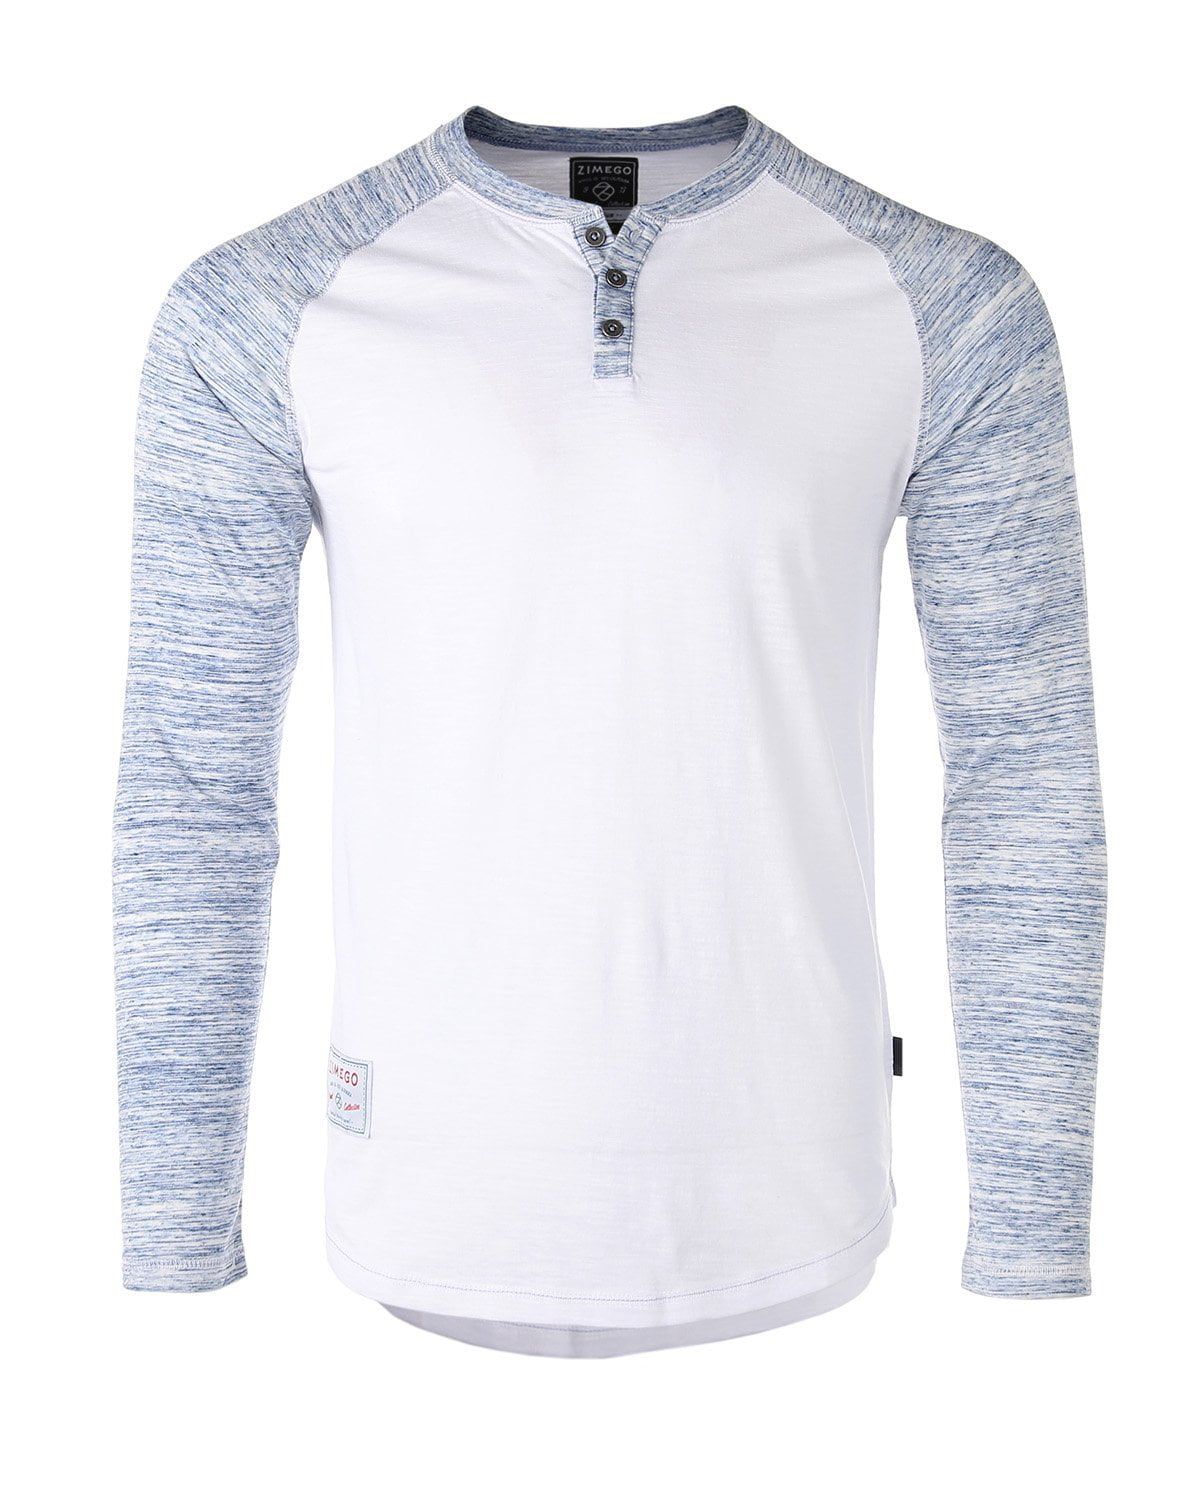 Casual Long Sleeve Raglan Athletic Active Fashion T-Shirts Tees Tops ZIMEGO Men's Baseball Henley Shirts 